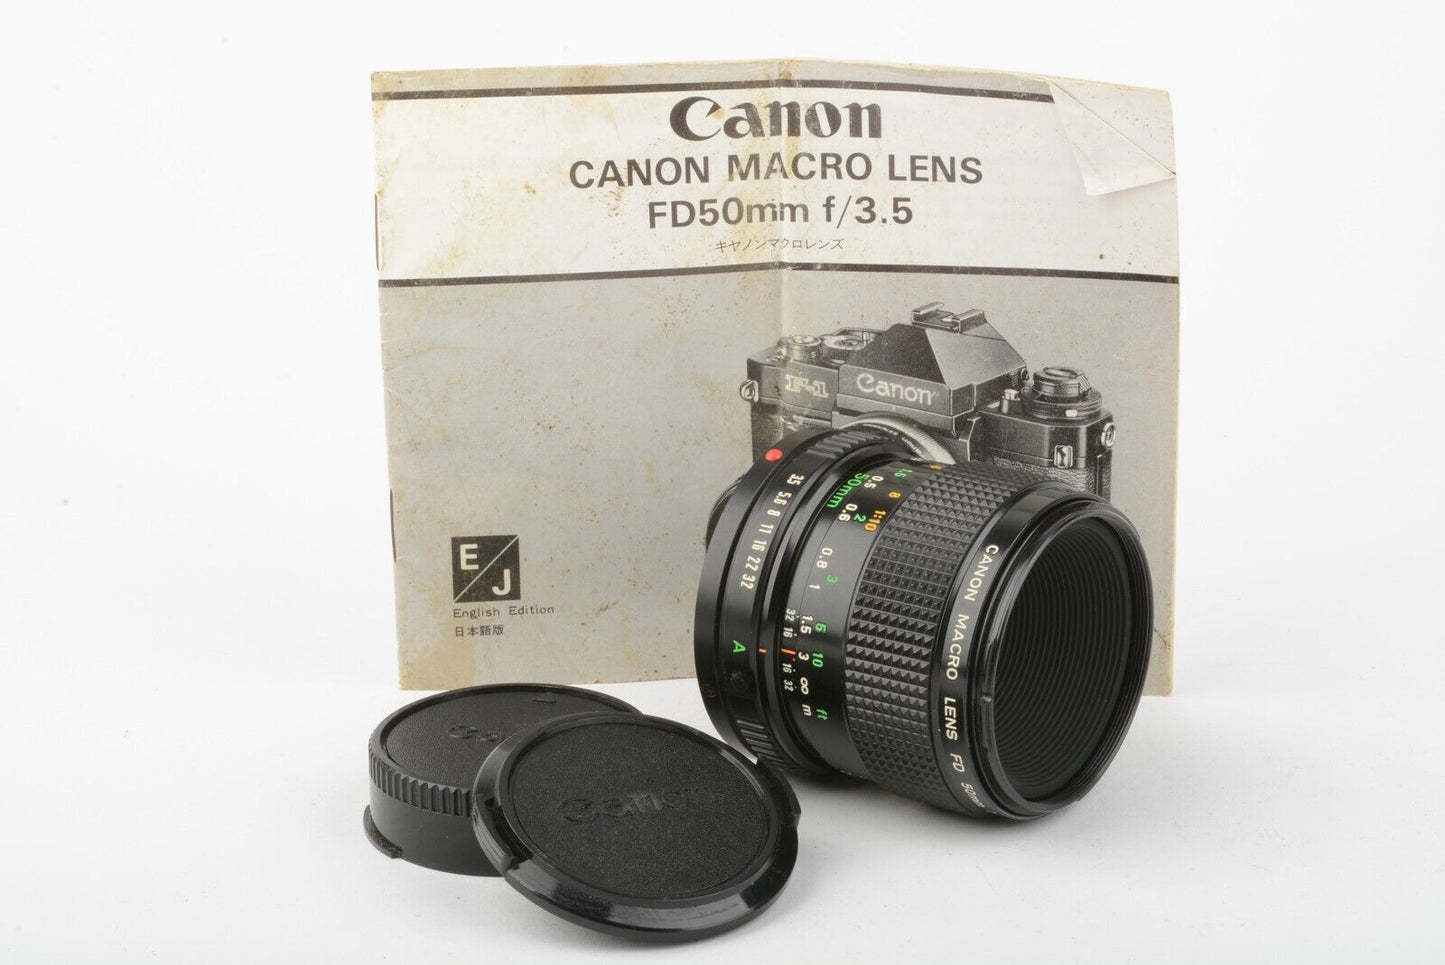 MINT- CANON FD 50mm f3.5 MACRO MF LENS, CAPS, VERY NICE & CLEAN + MANUAL